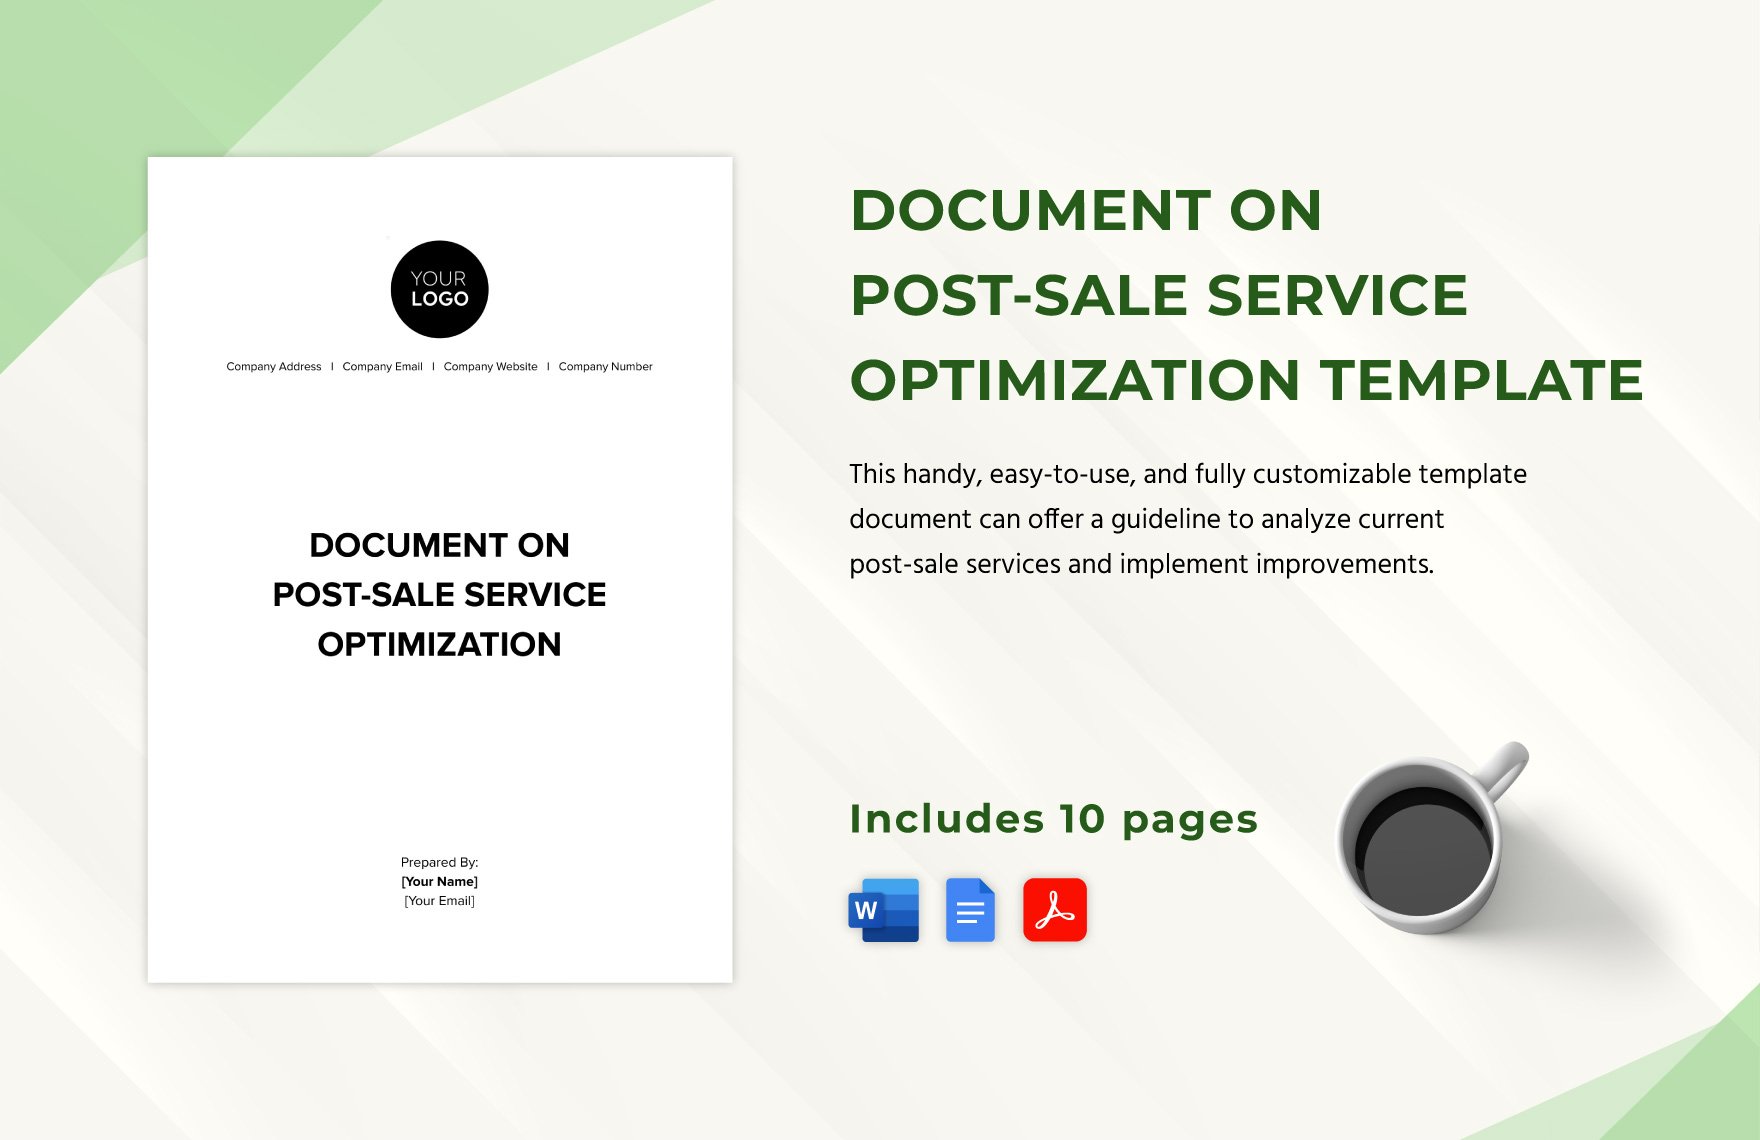 Document on Post-Sale Service Optimization Template